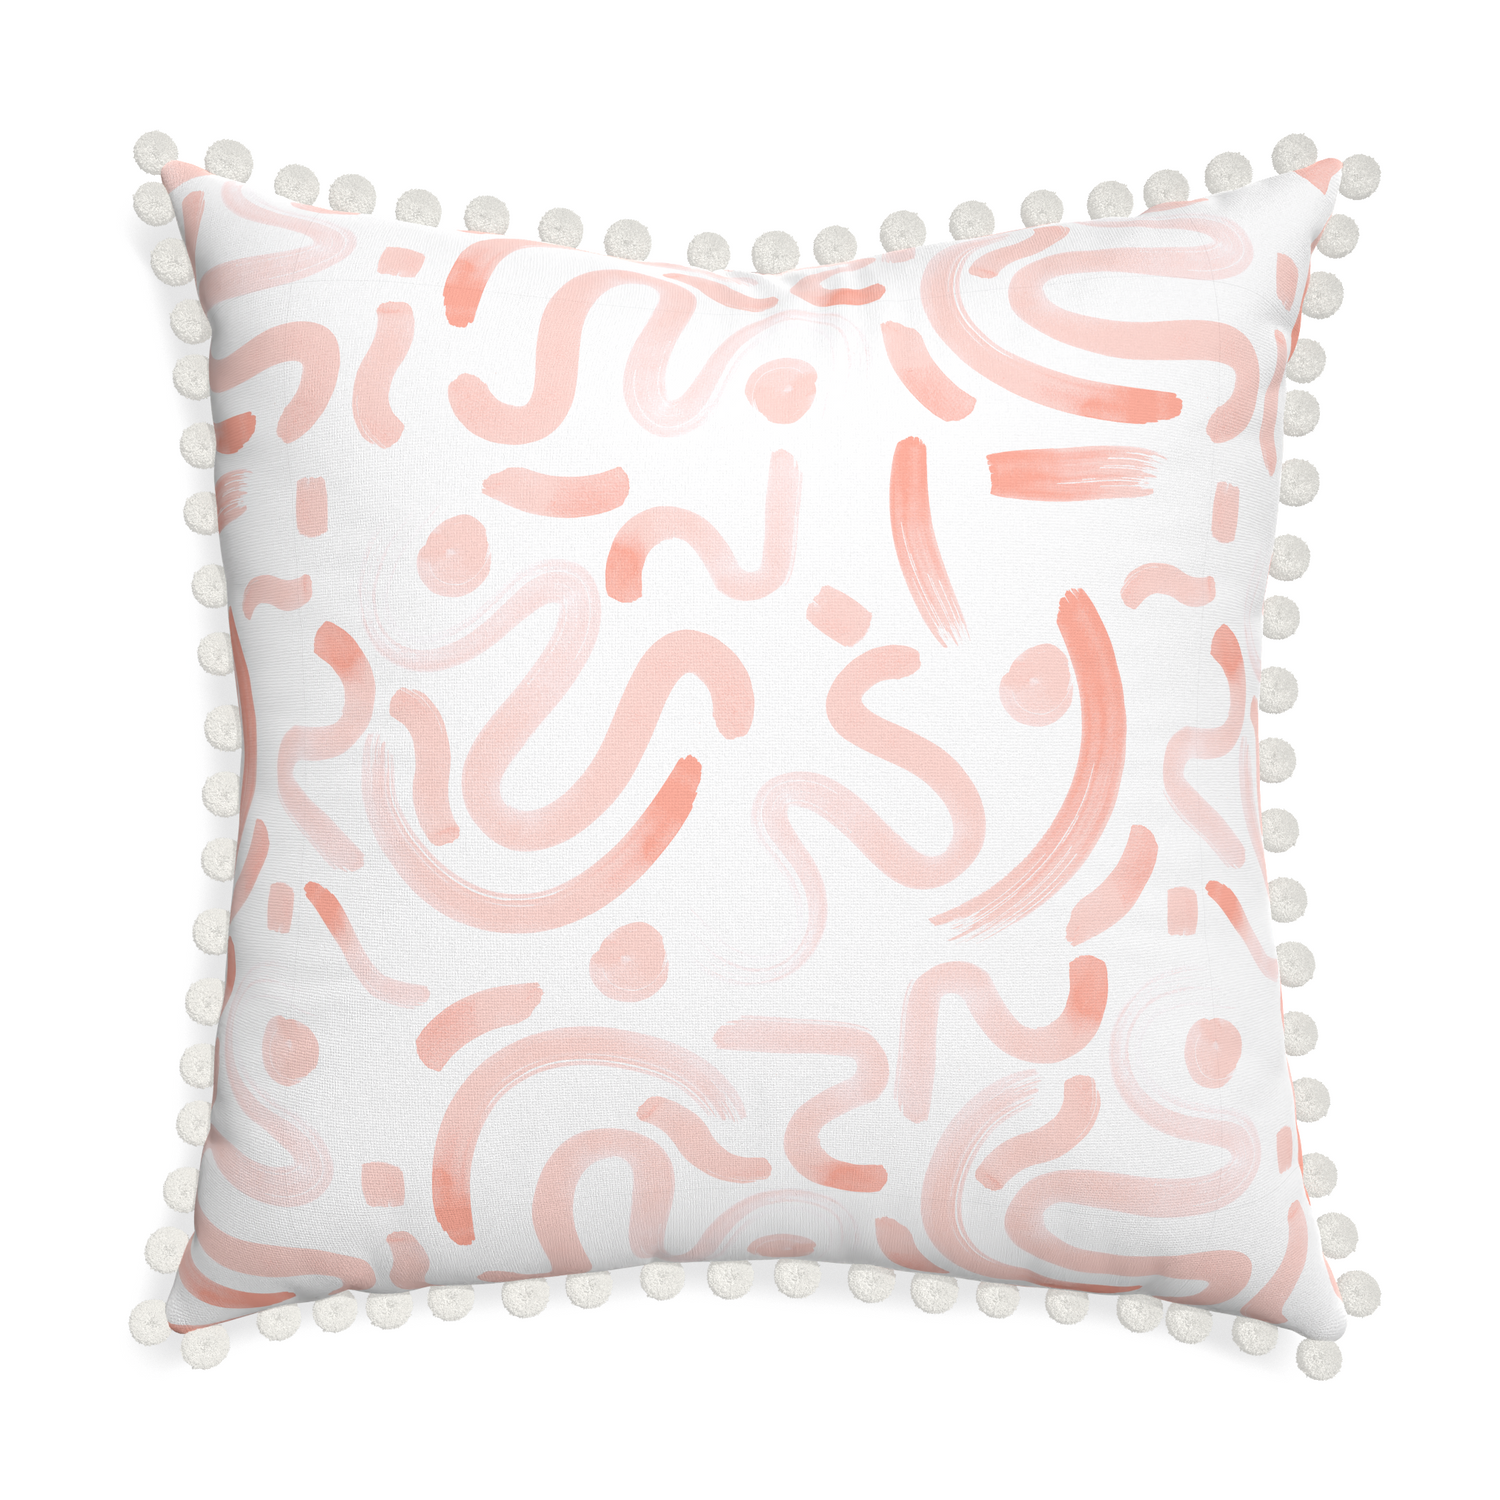 Euro-sham hockney pink custom pillow with snow pom pom on white background